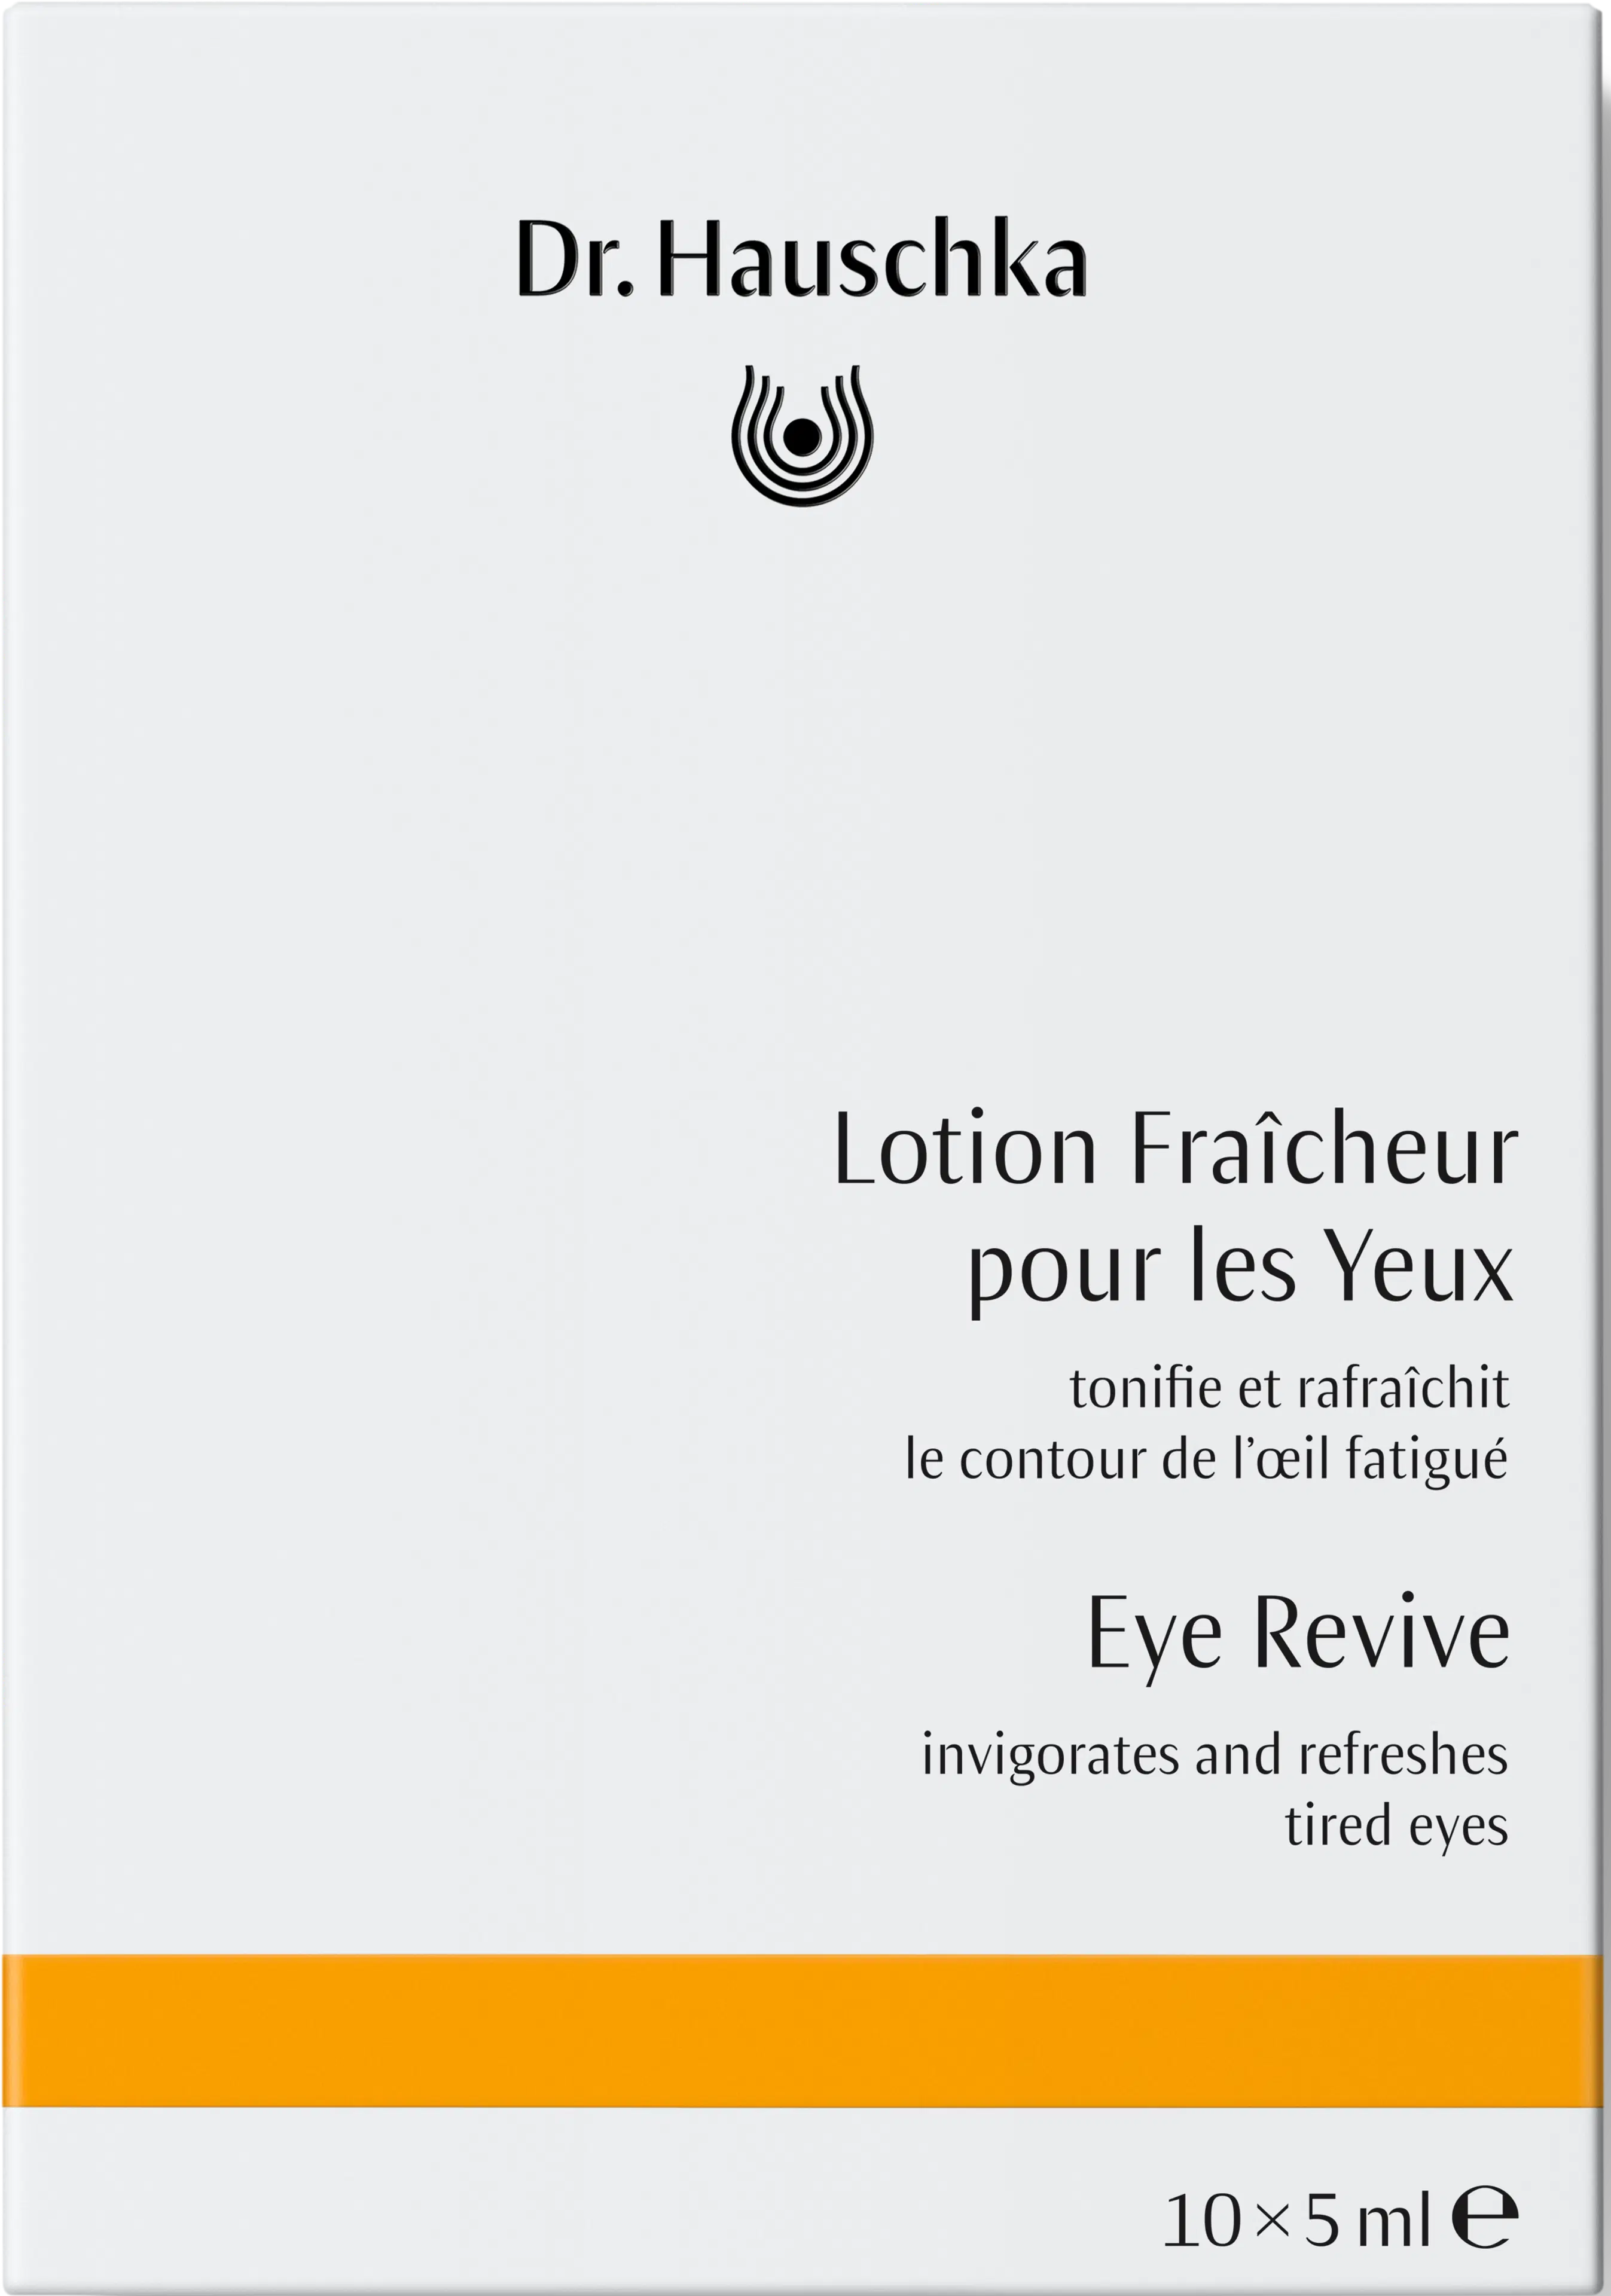 Dr. Hauschka Eye Revive silmävirkiste 10 x 5 ml